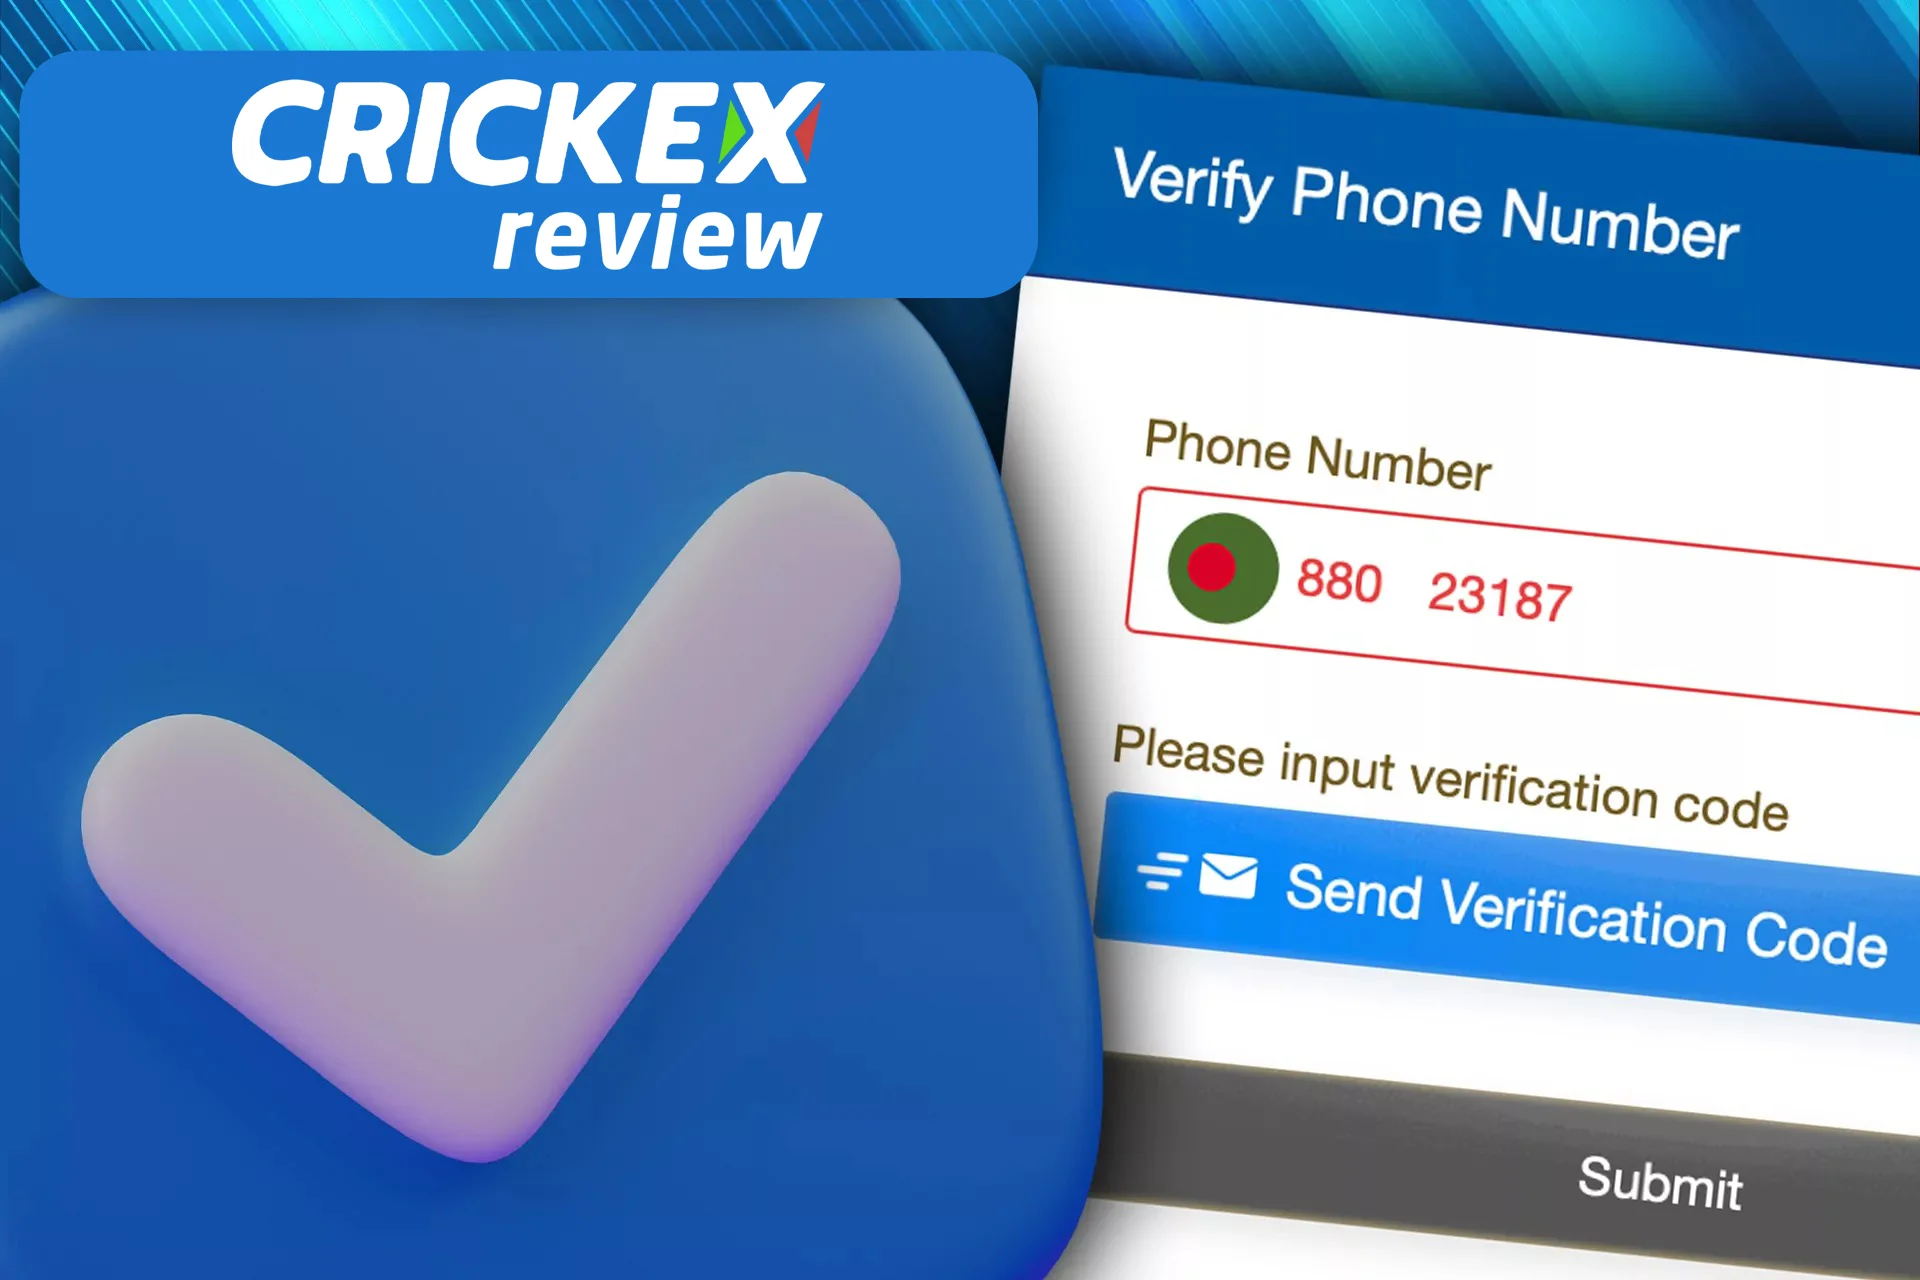 Every Crickex user should verify his account.